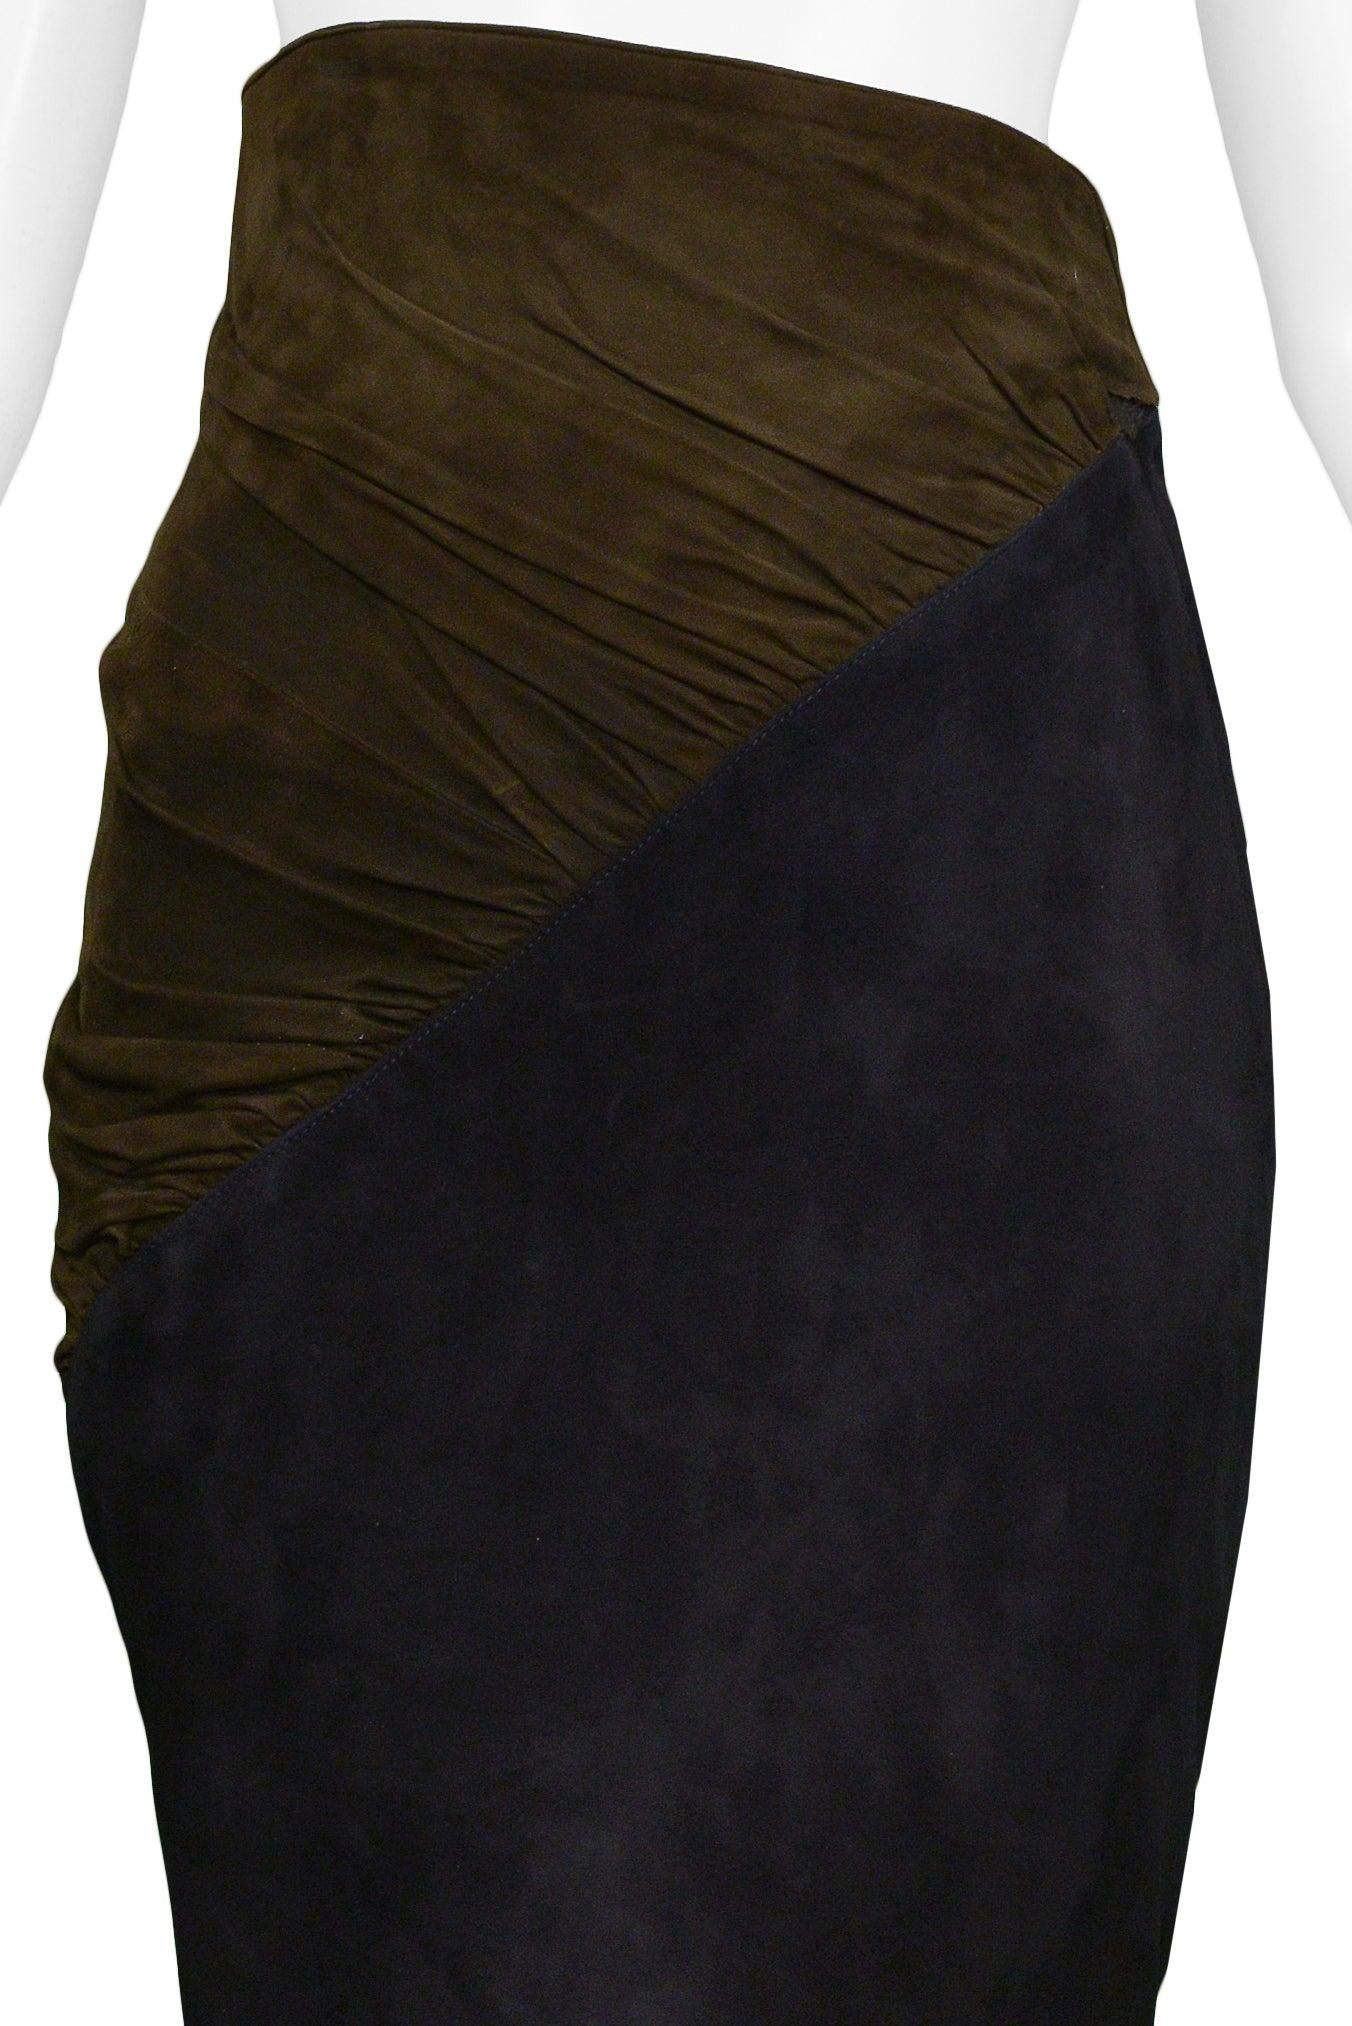 Alaia Navy & Black Suede Pencil Skirt In Excellent Condition In Los Angeles, CA